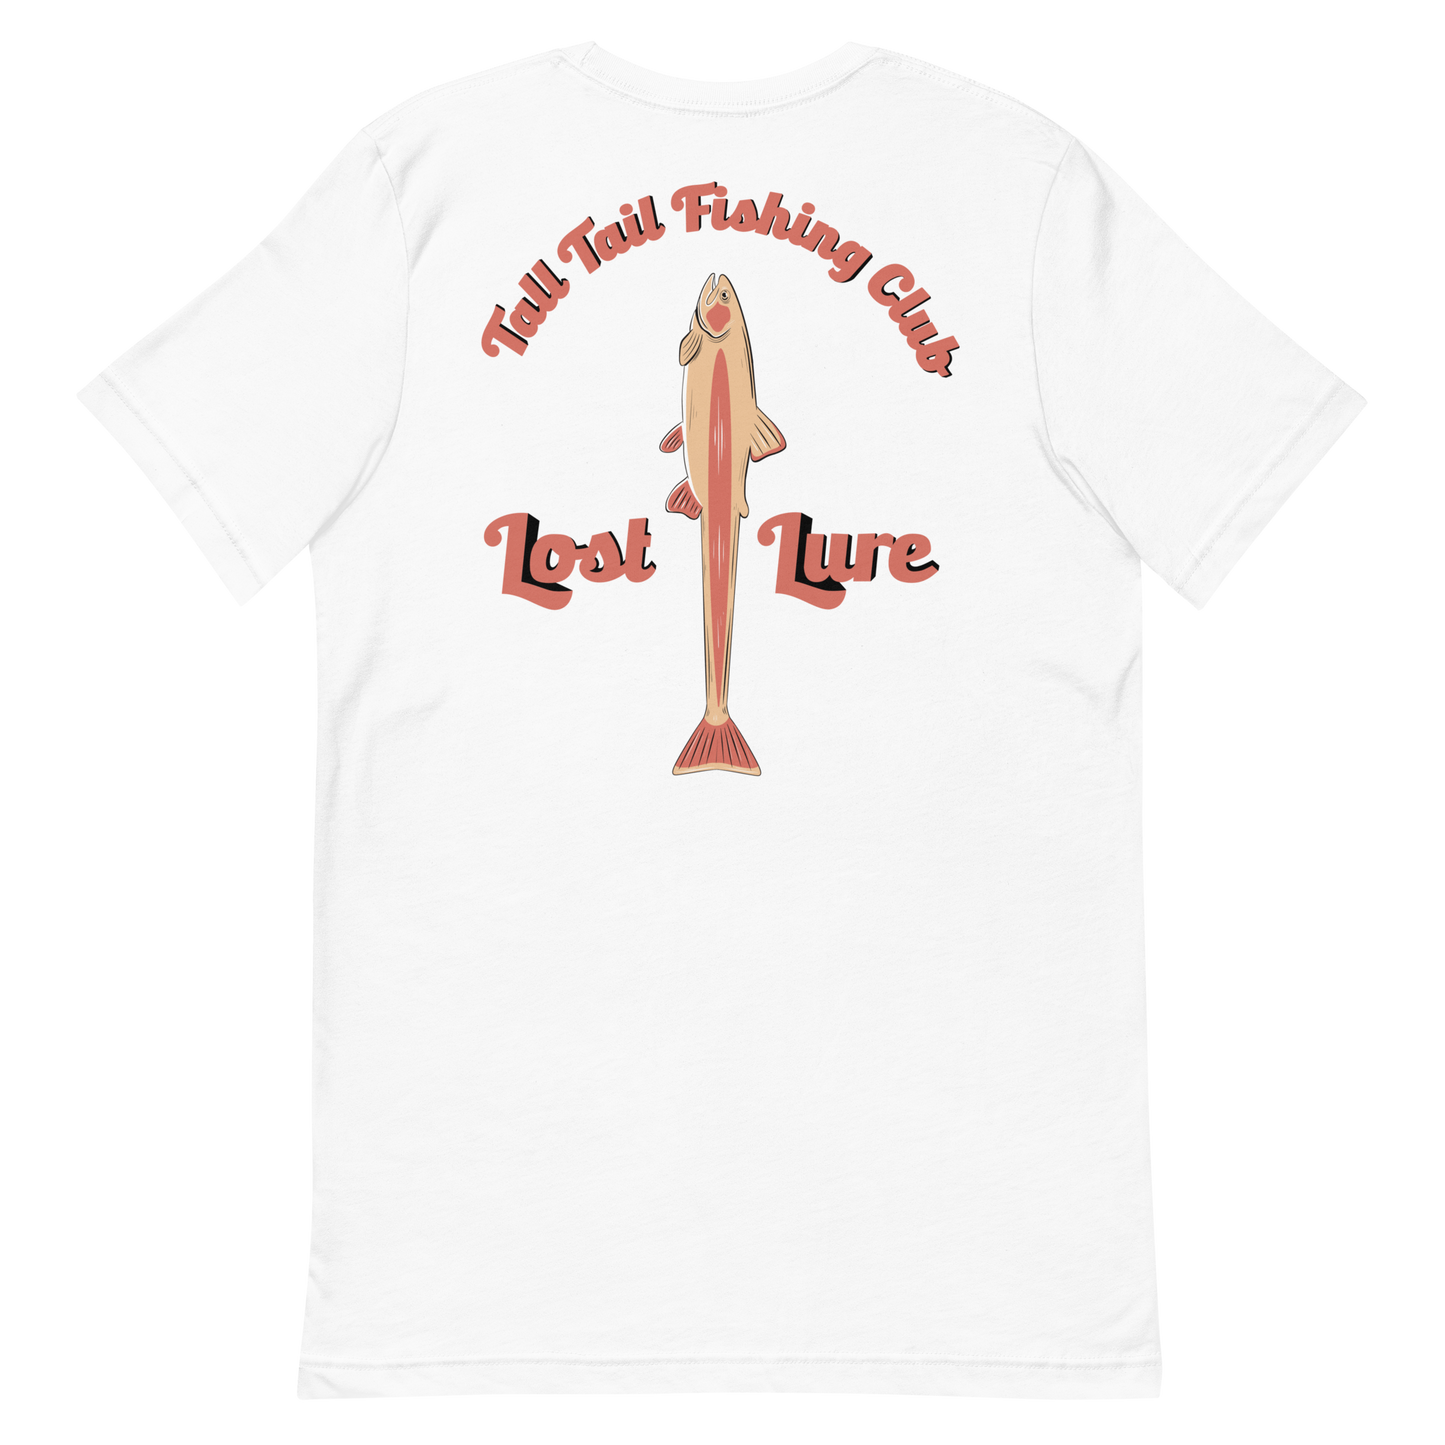 Tall Tail Fishing Club T-Shirt